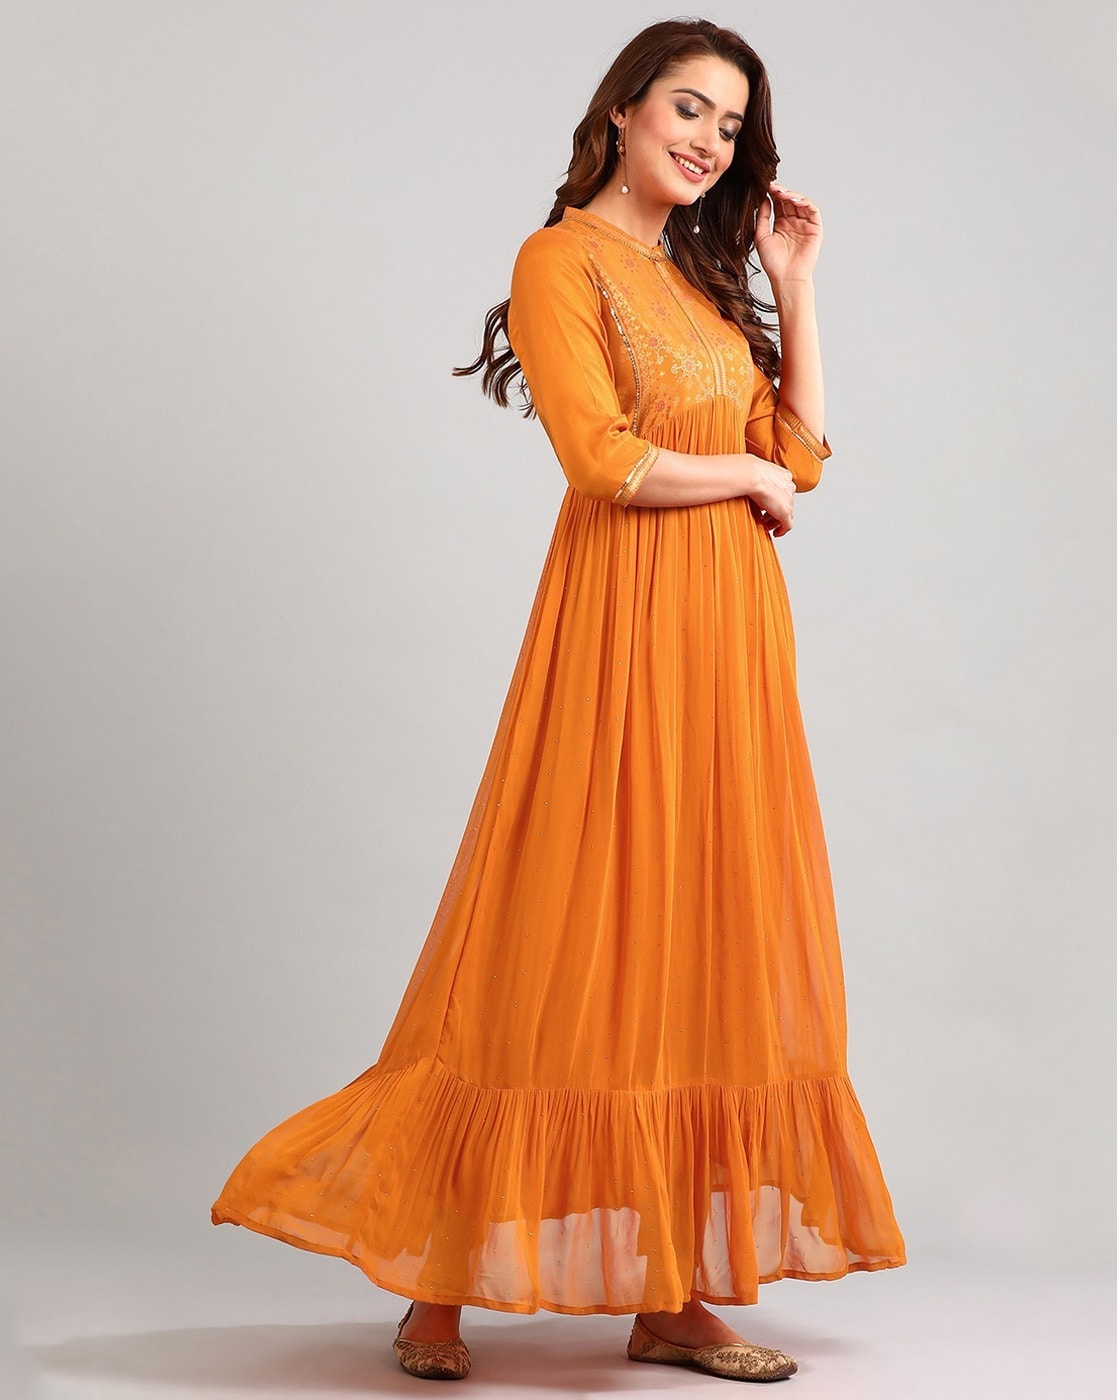 Shop Orange Color Indian Gown Online at Best Price